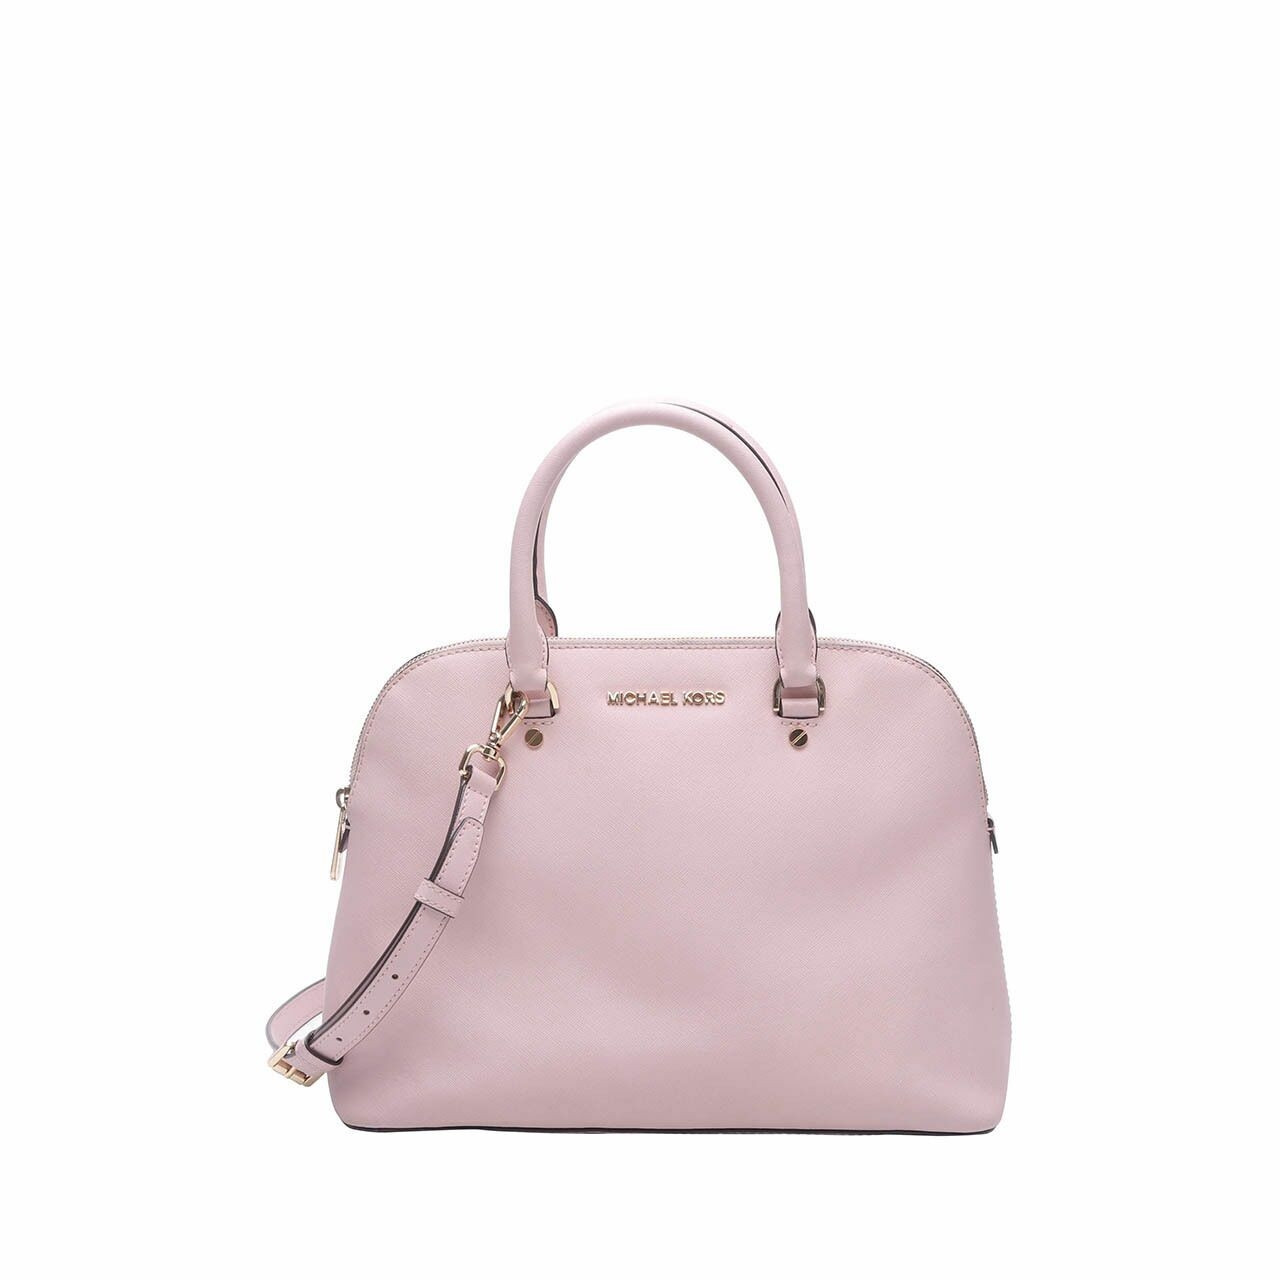 Michael Kors Cindy Saffiano Leather Pink Satchel Bag